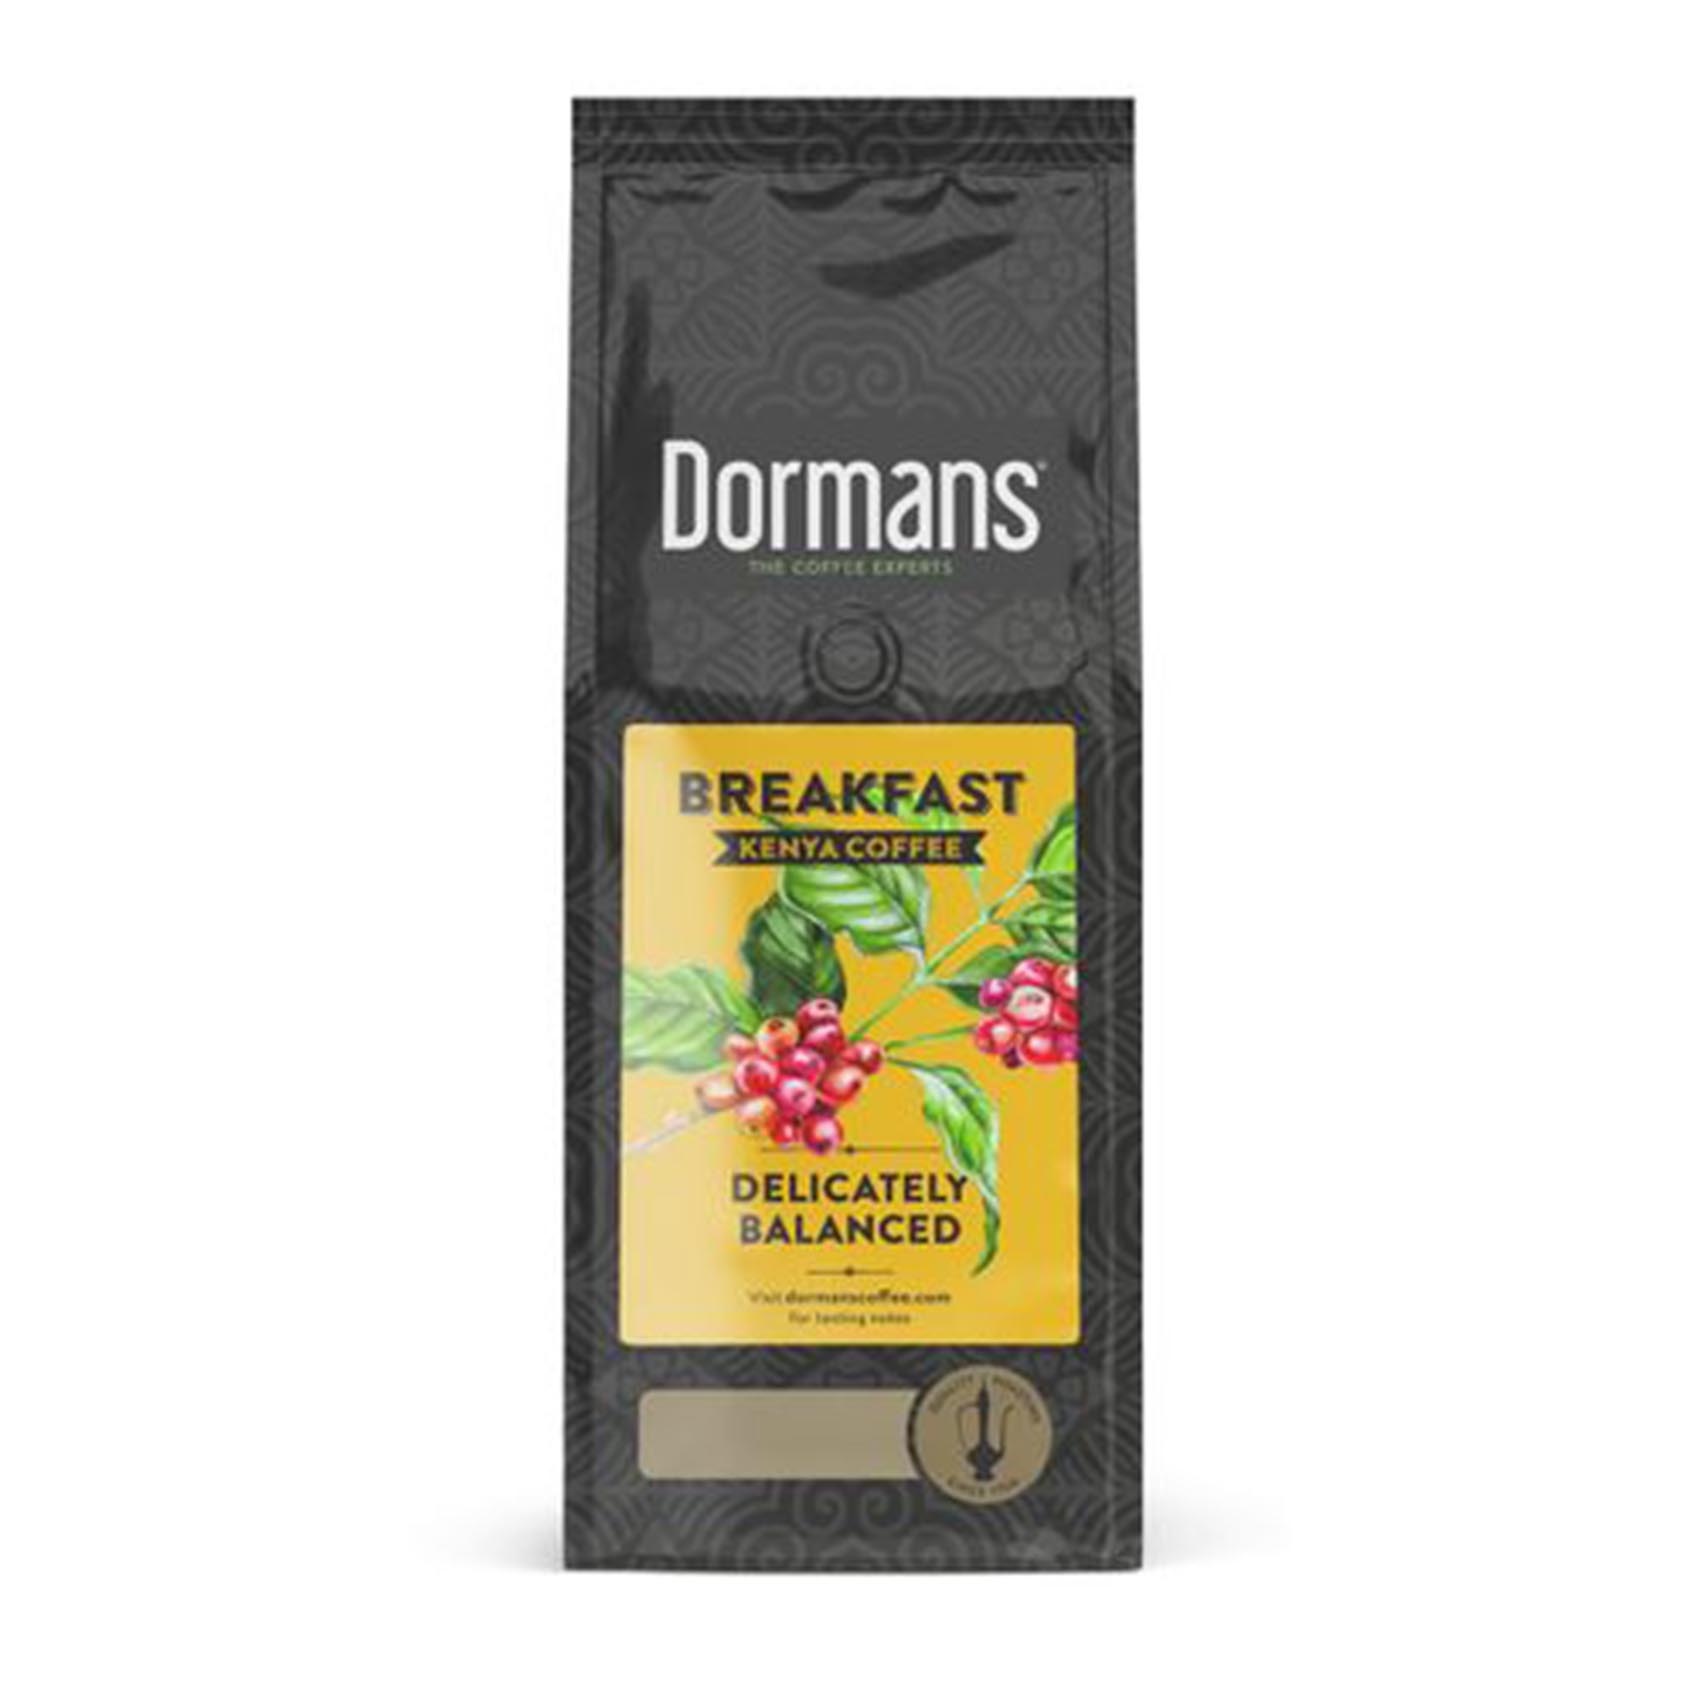 Dormans Breakfast Delicately Balanced Dark And Fine Kenya Coffee 375g